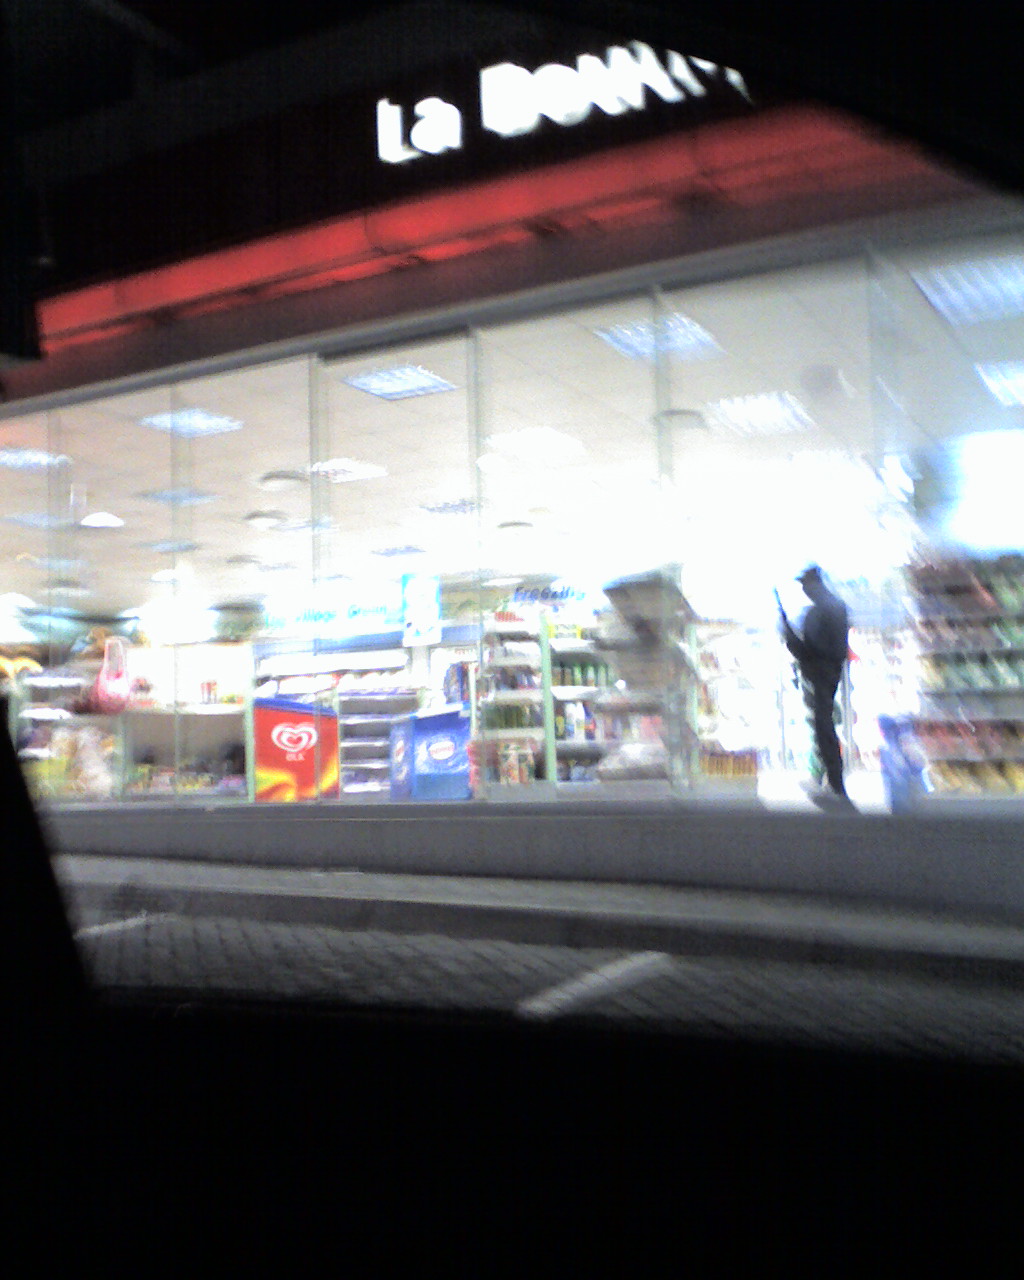 Cameraphone - convenience store - guard with shotgun